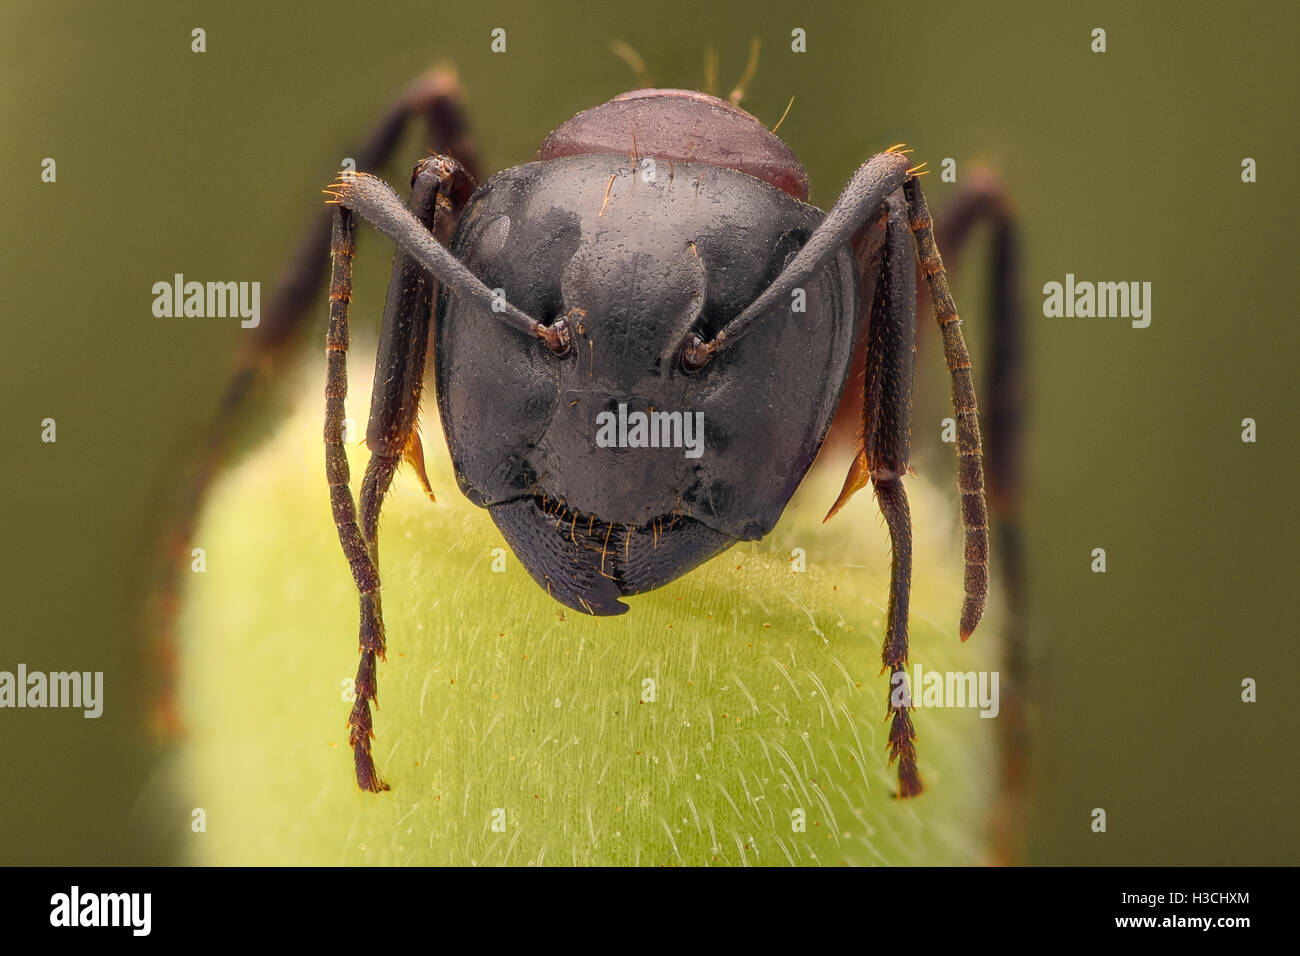 Extreme magnification - Ant portrait Stock Photo